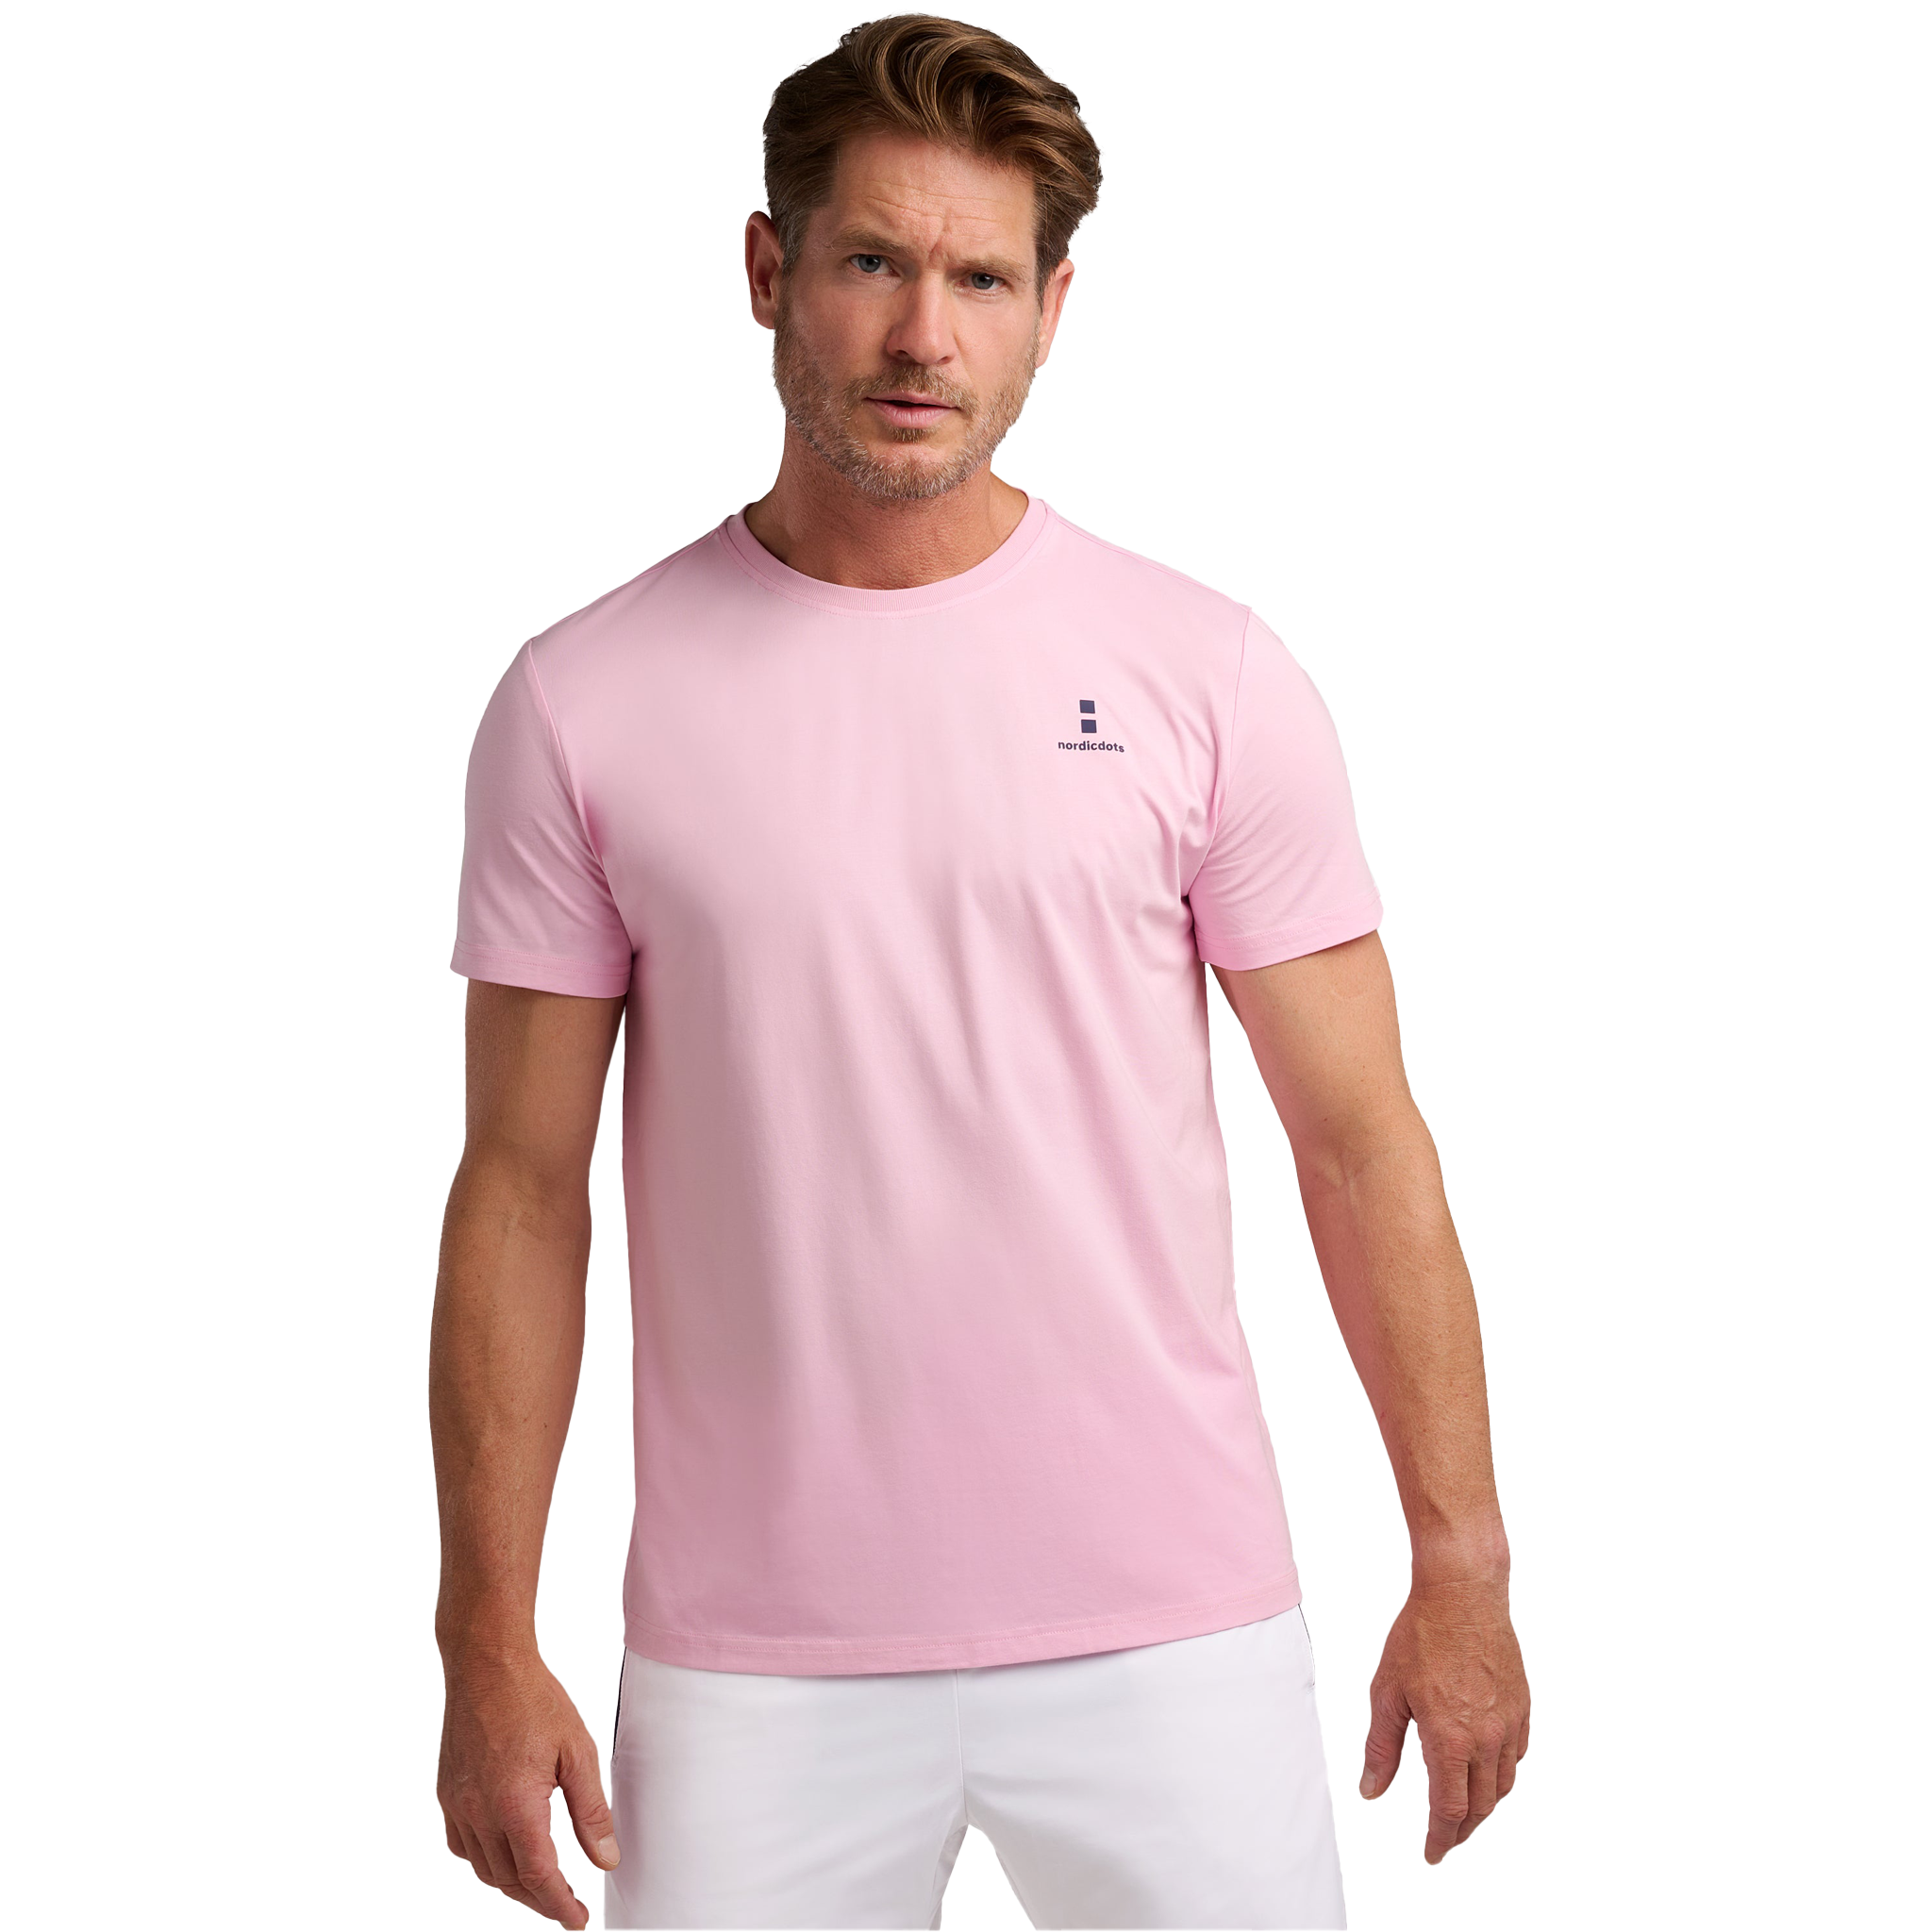 nordicdots Modal Comfort T-Shirt Sea Pink